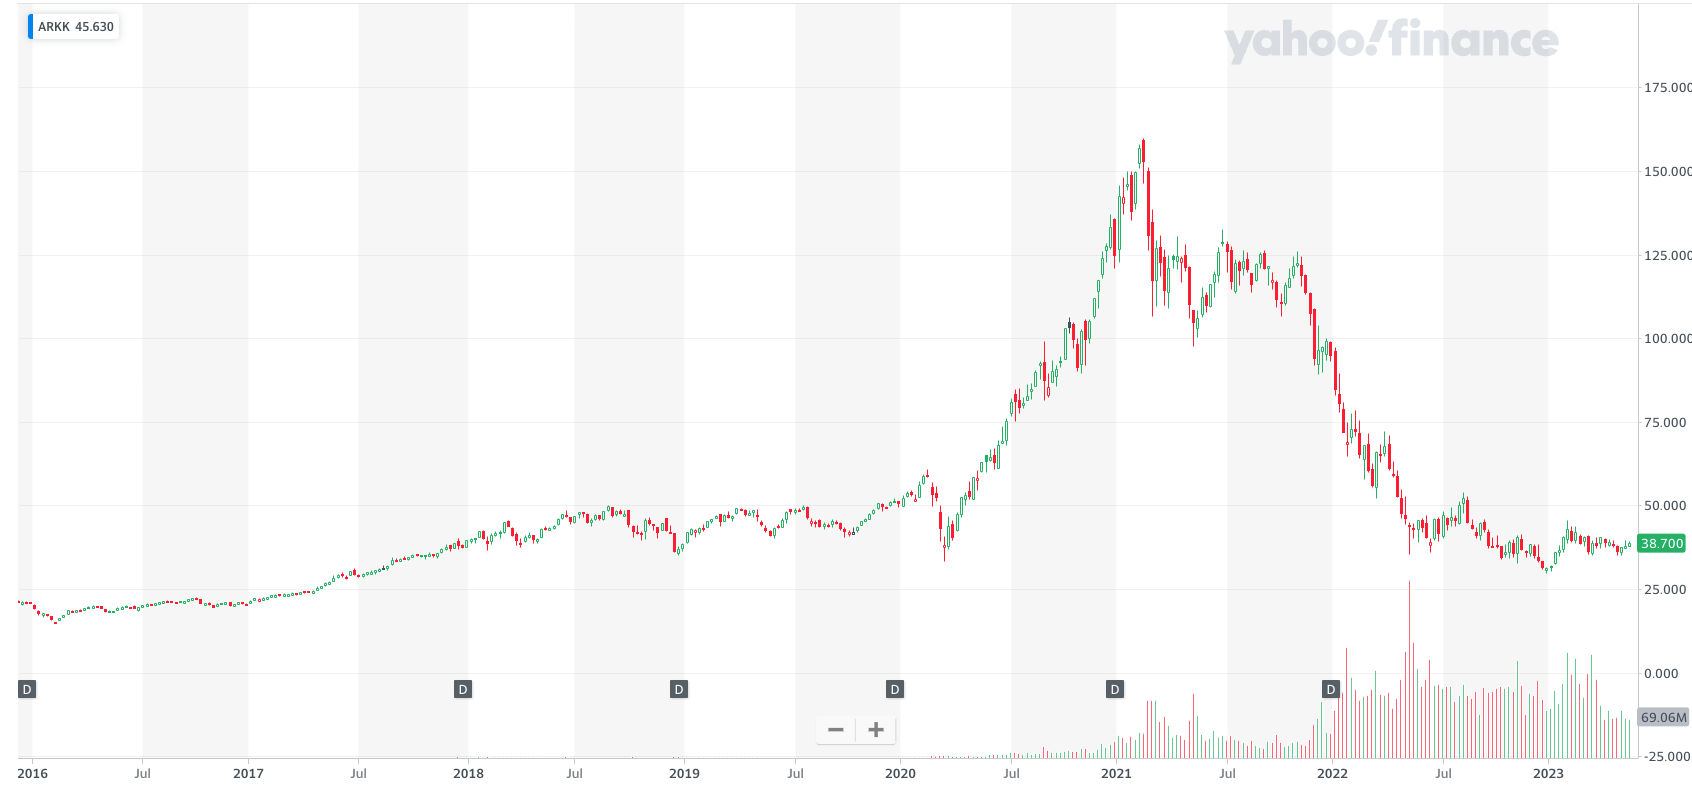 ARKKの株価推移